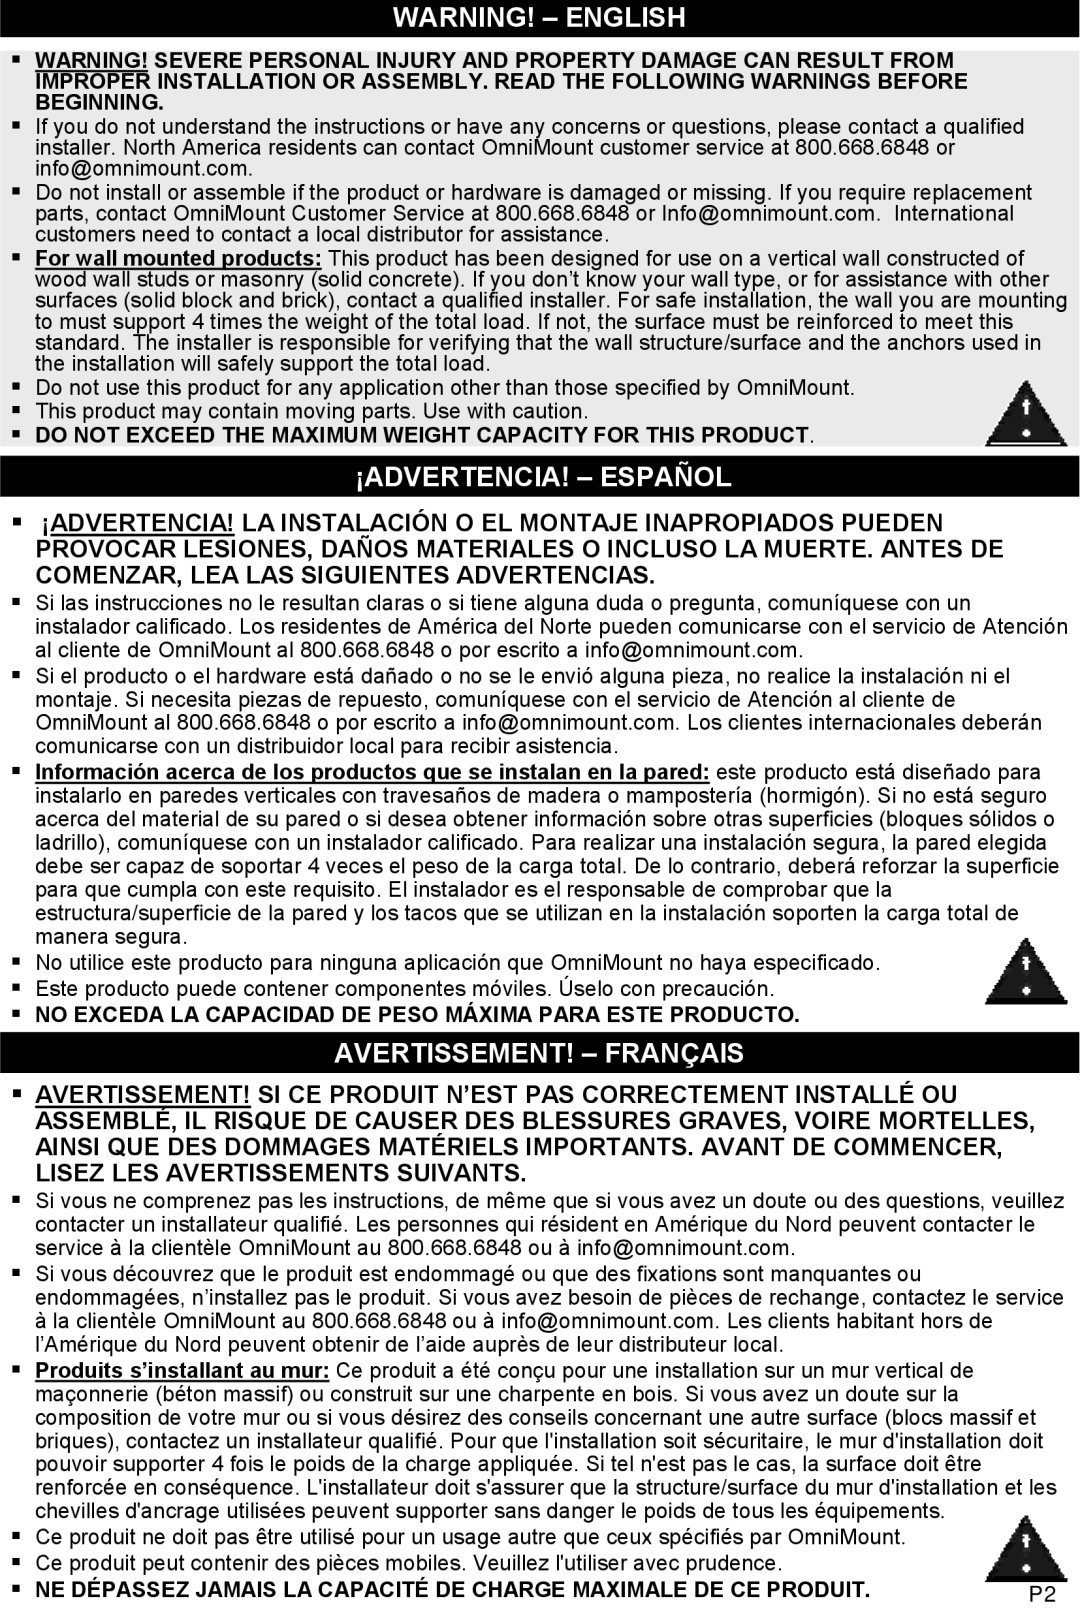 Omnimount MWF16 instruction manual Warning! - English, ¡Advertencia! - Español, Avertissement! - Français 